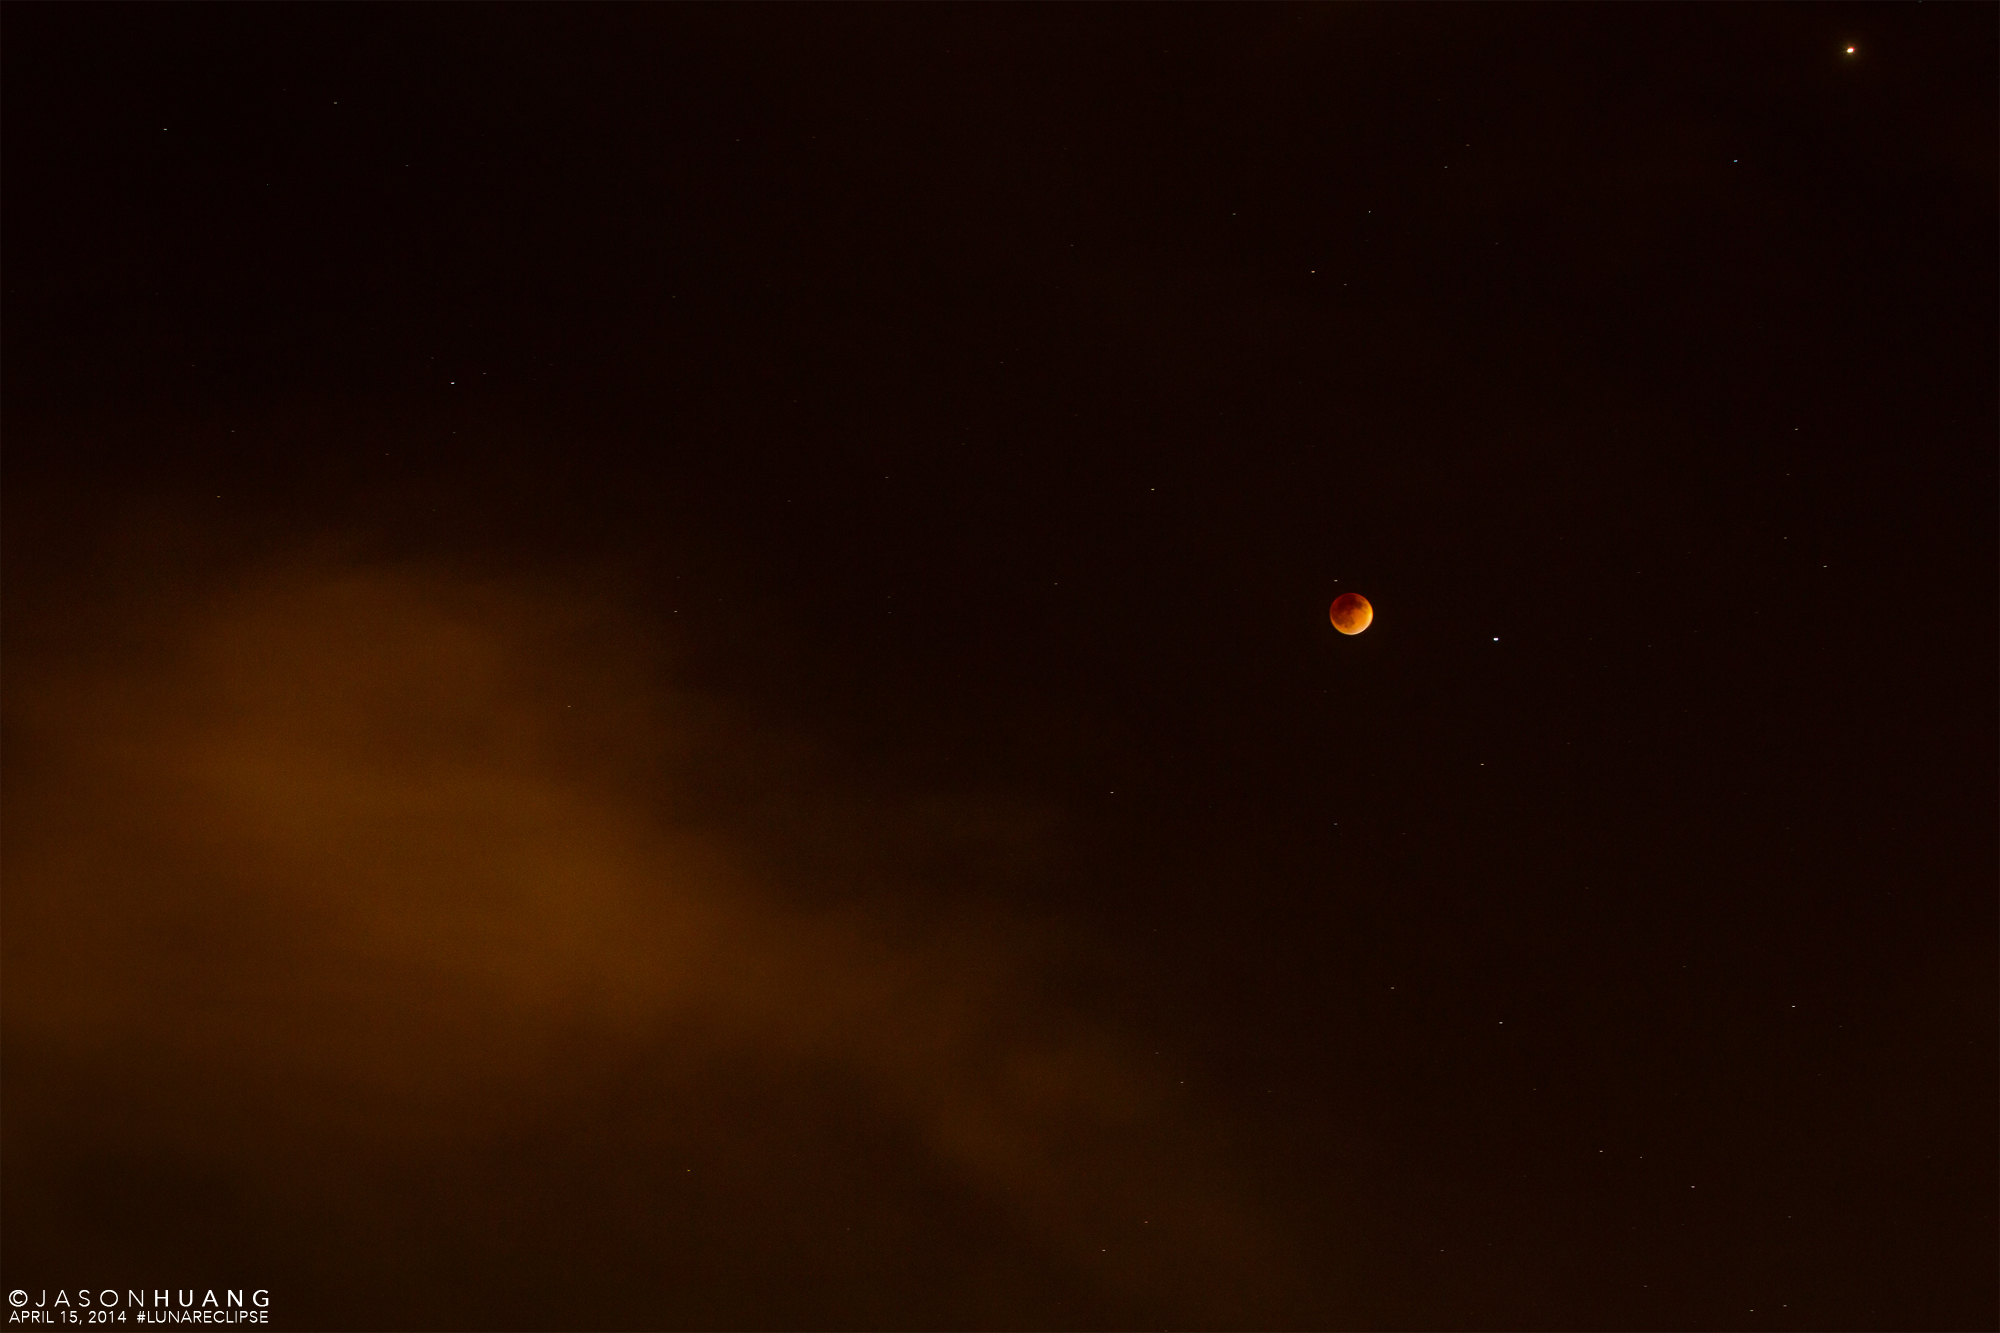 Blood Moon Lunar Eclipse over Orange County, CA on April 15, 2014.